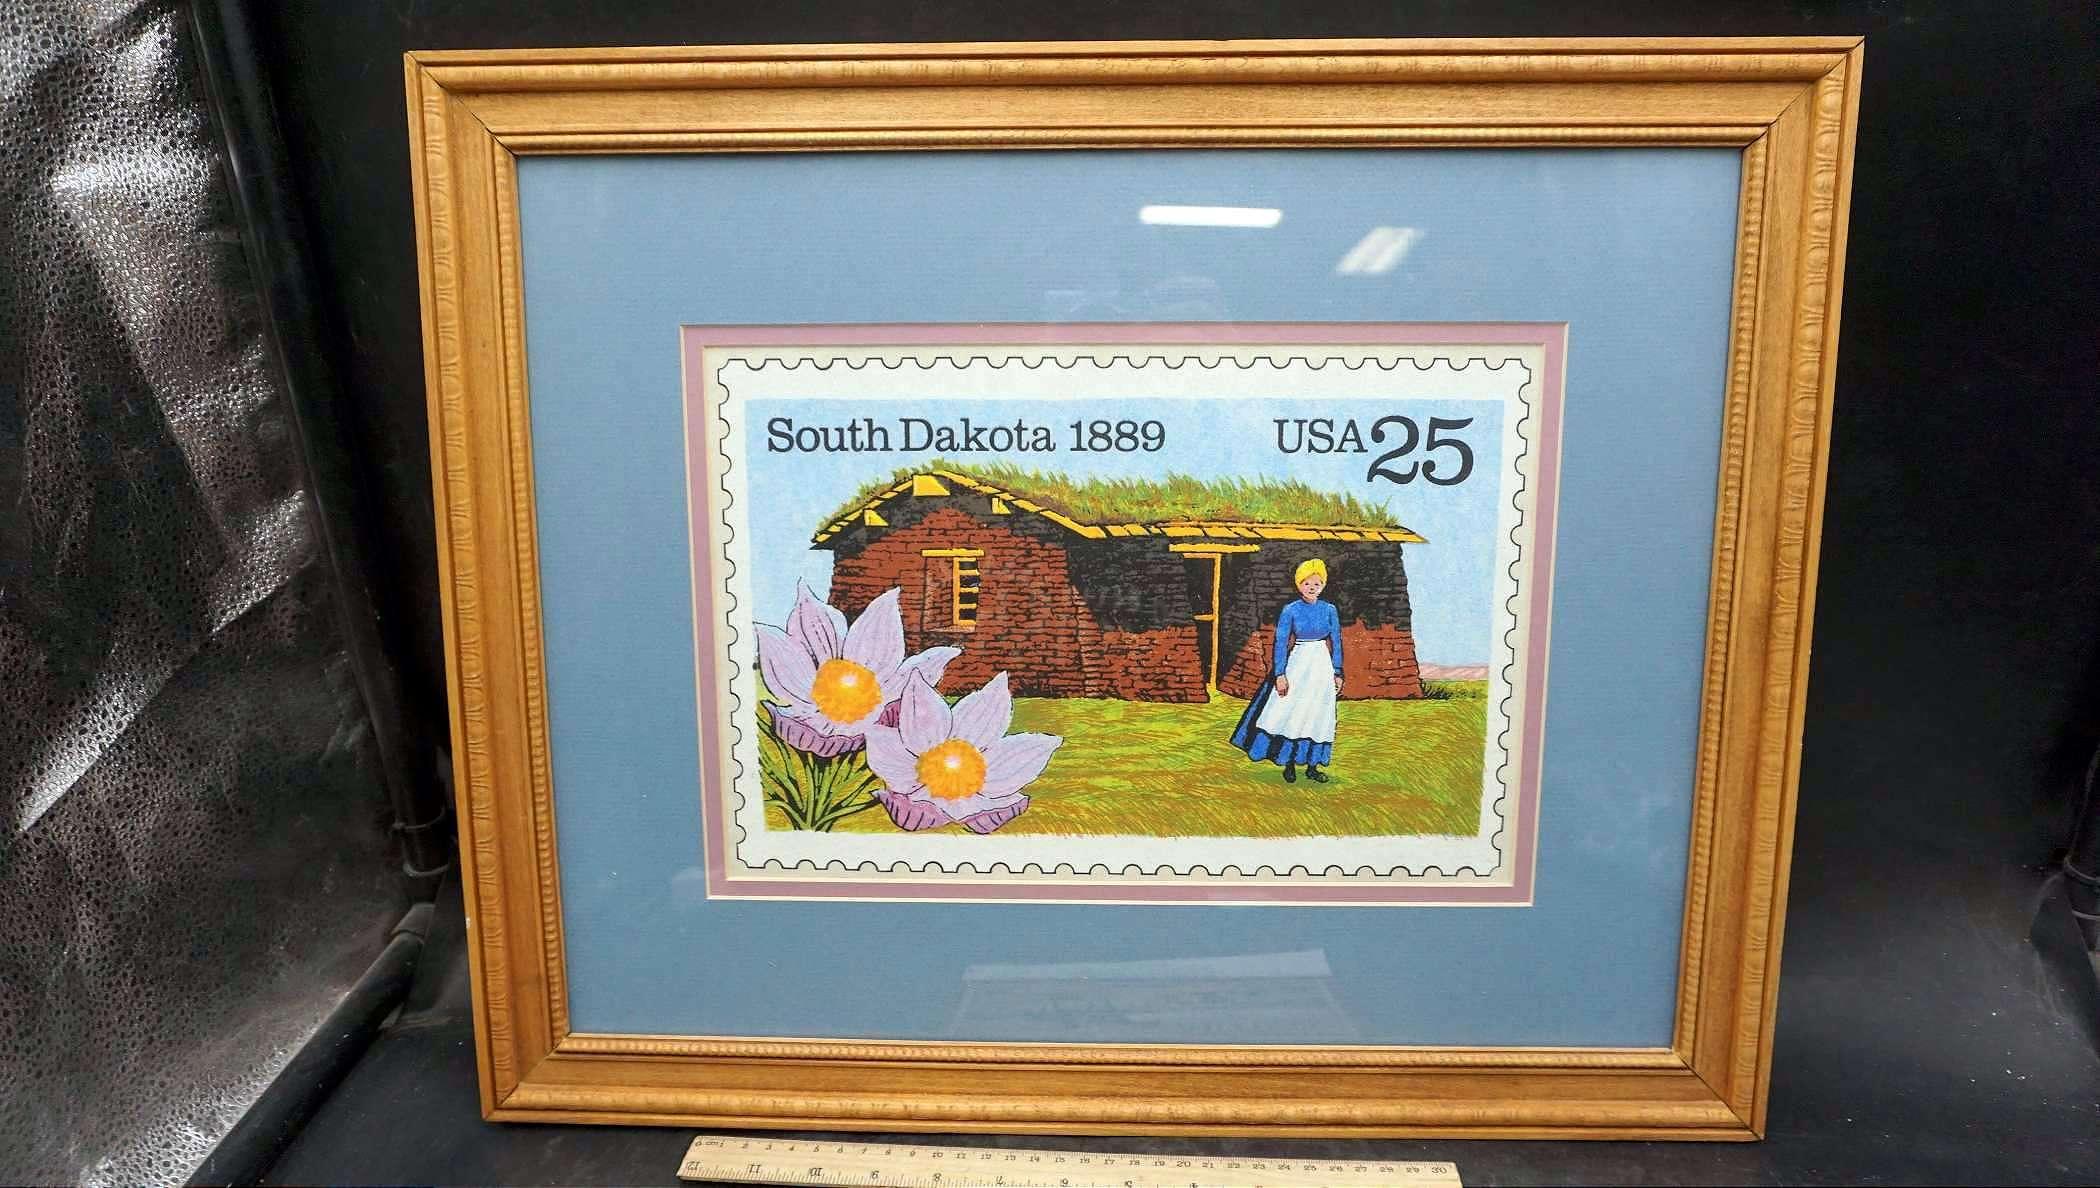 Framed South Dakota 1889 U.S.A. 25 Stamp Picture & Cowboy Artists 2001 Calendar